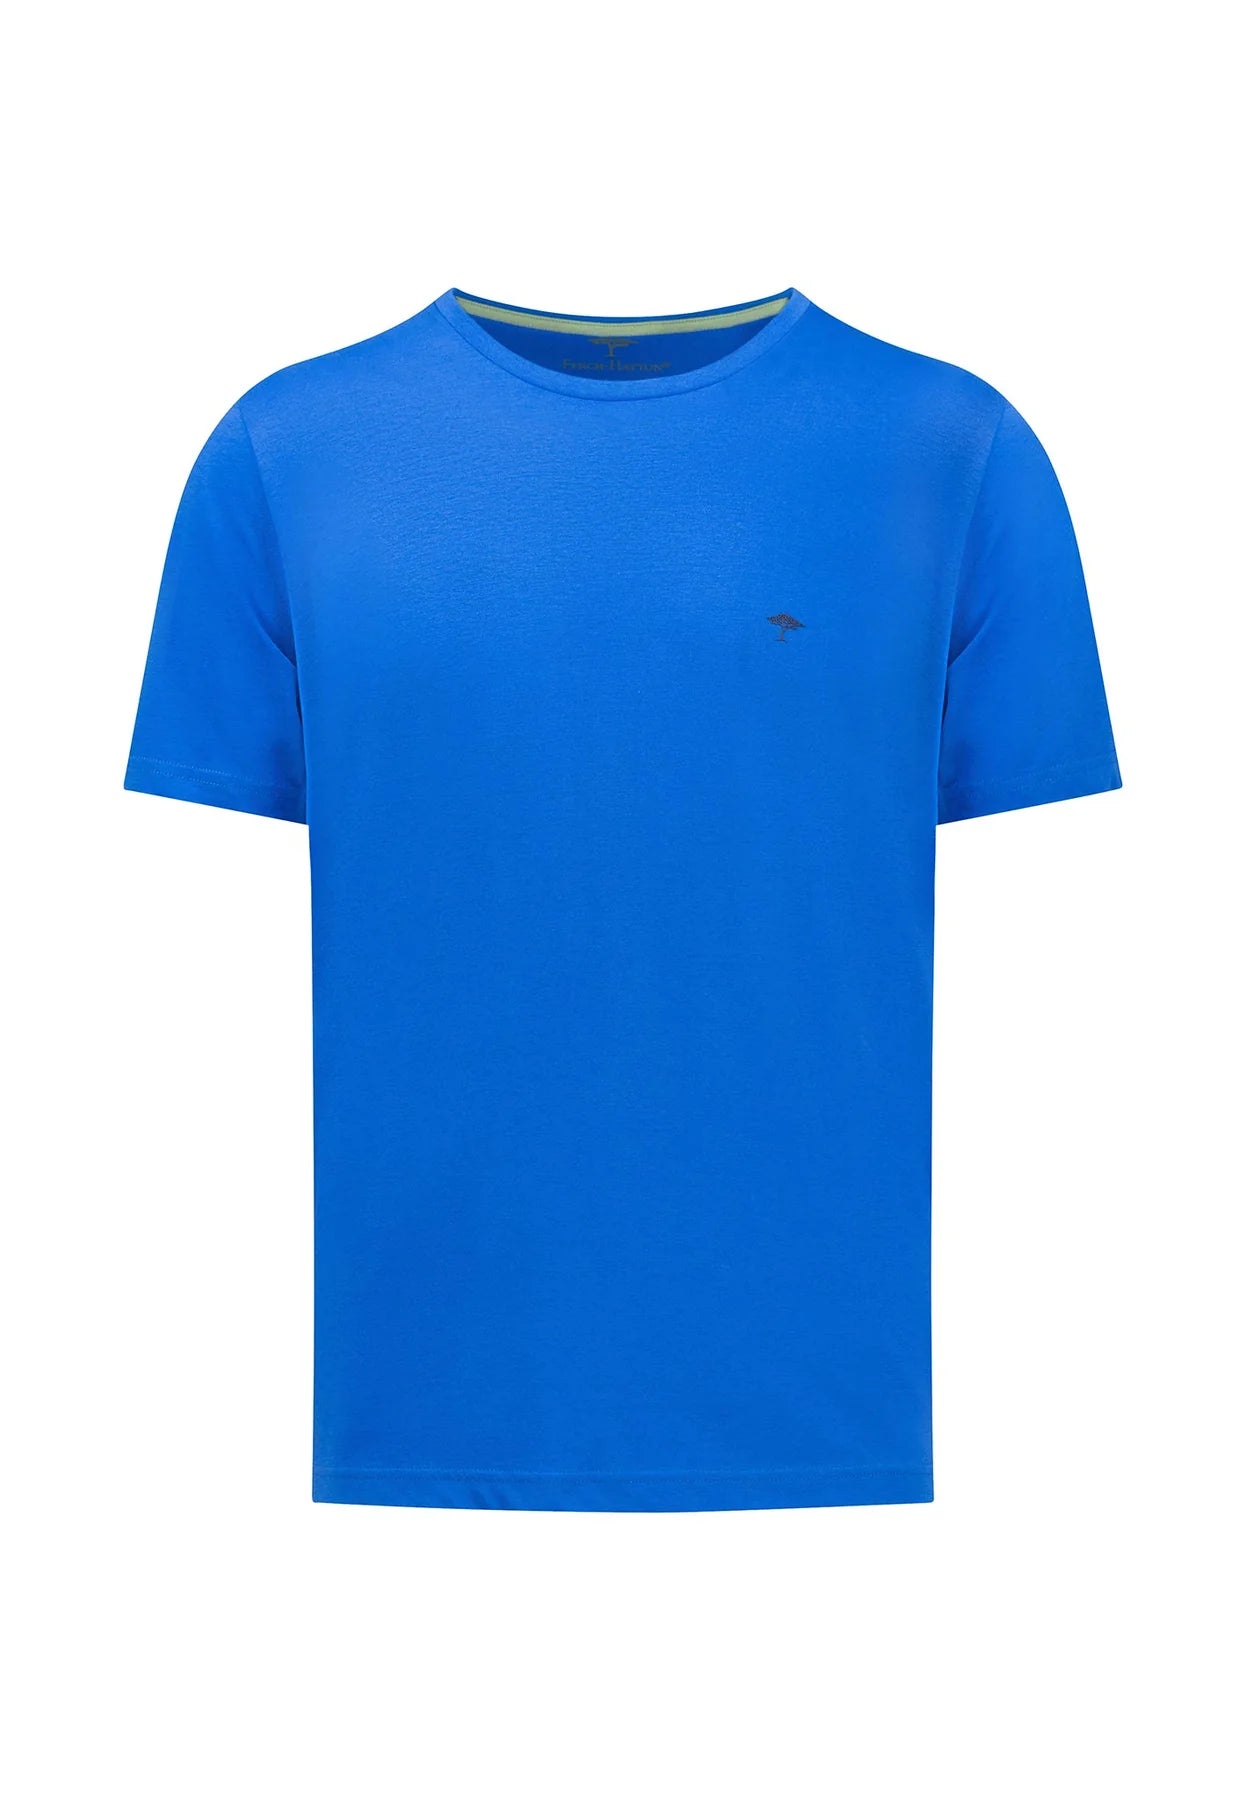 Fynch Hatton Cotton Jersey T-Shirt - Bright Ocean